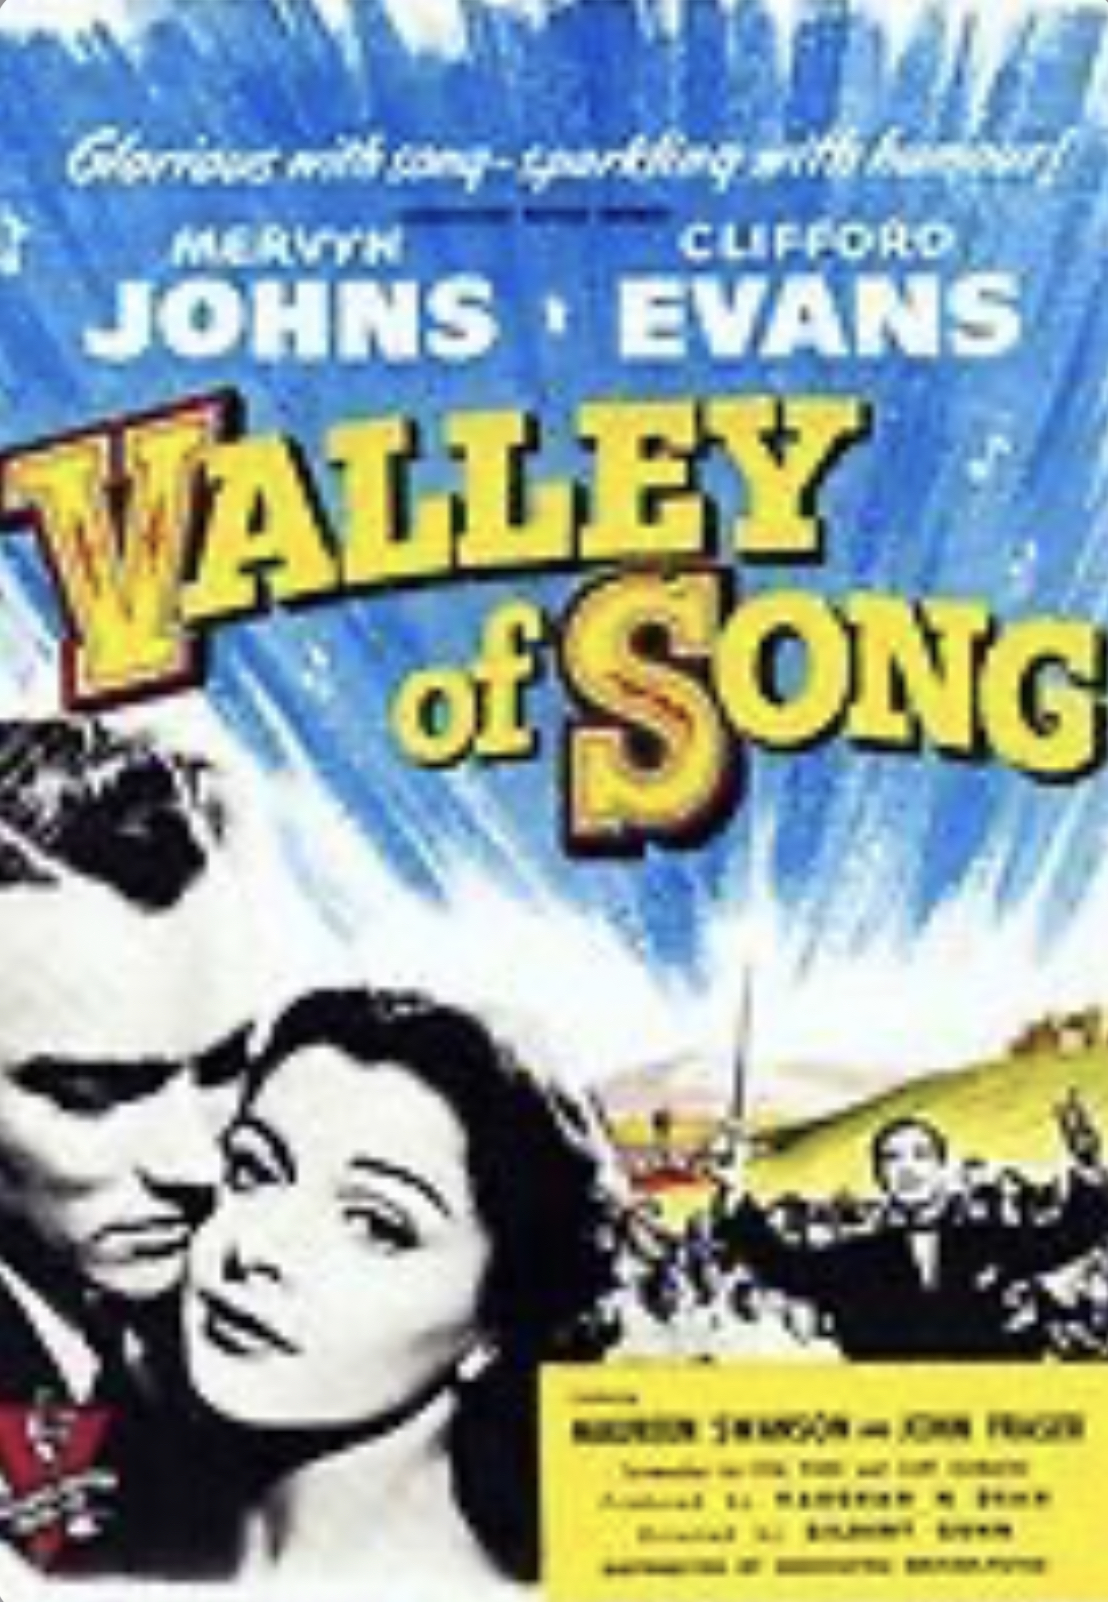 Valley of Song (1953) starring Mervyn Johns on DVD on DVD